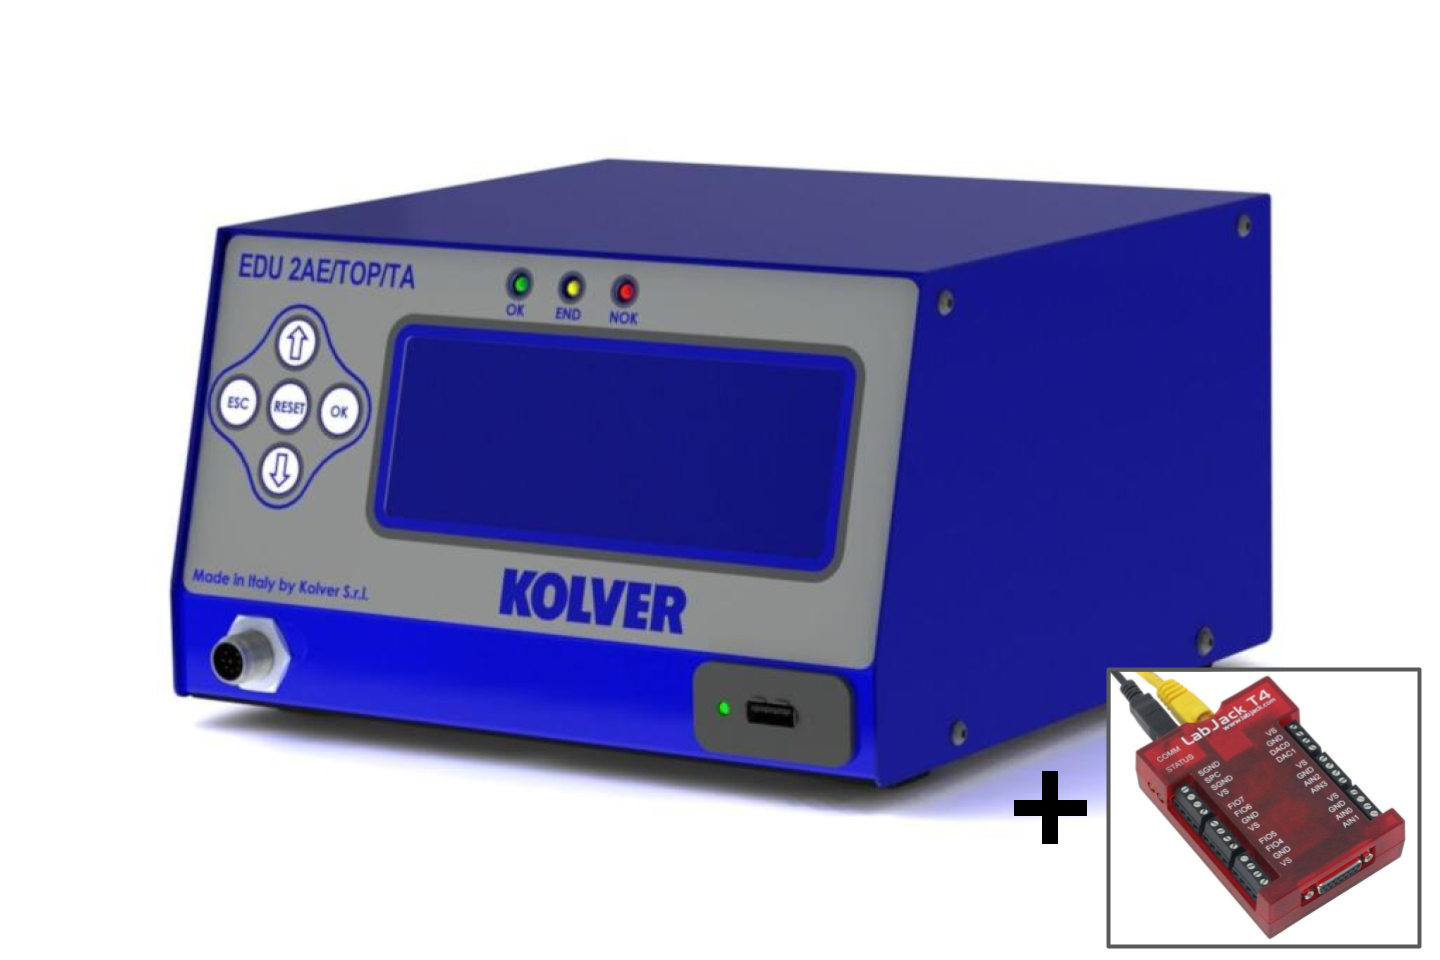 Kolver EDU 2AE/ TOP torque controller with LabJack T4